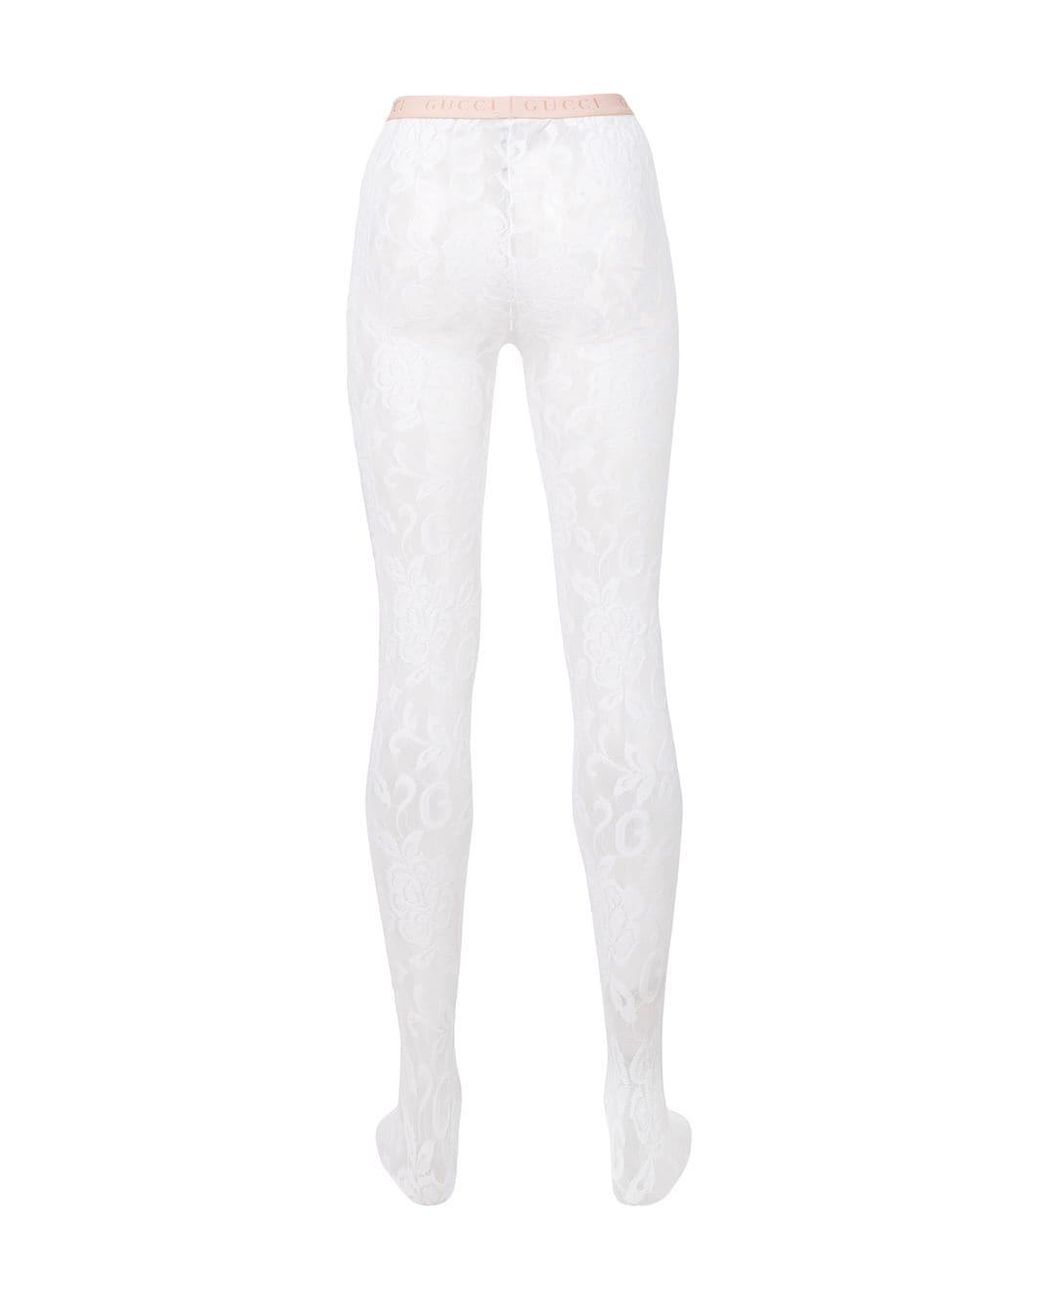 Gucci Pantyhose & Stockings for Women - Shop on FARFETCH